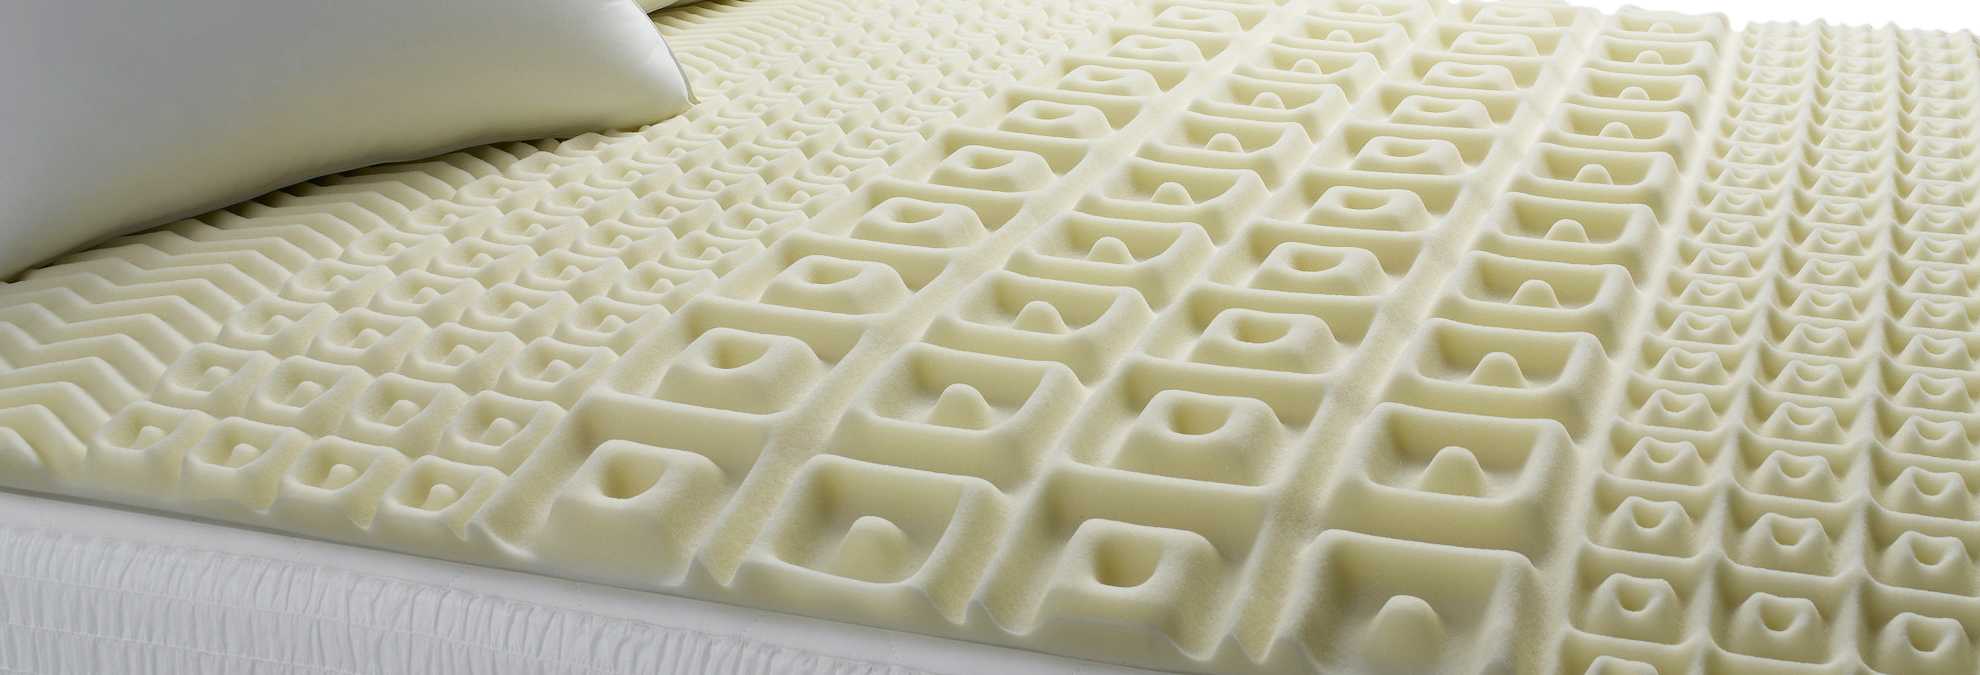 egg crate conventional foam mattress topper